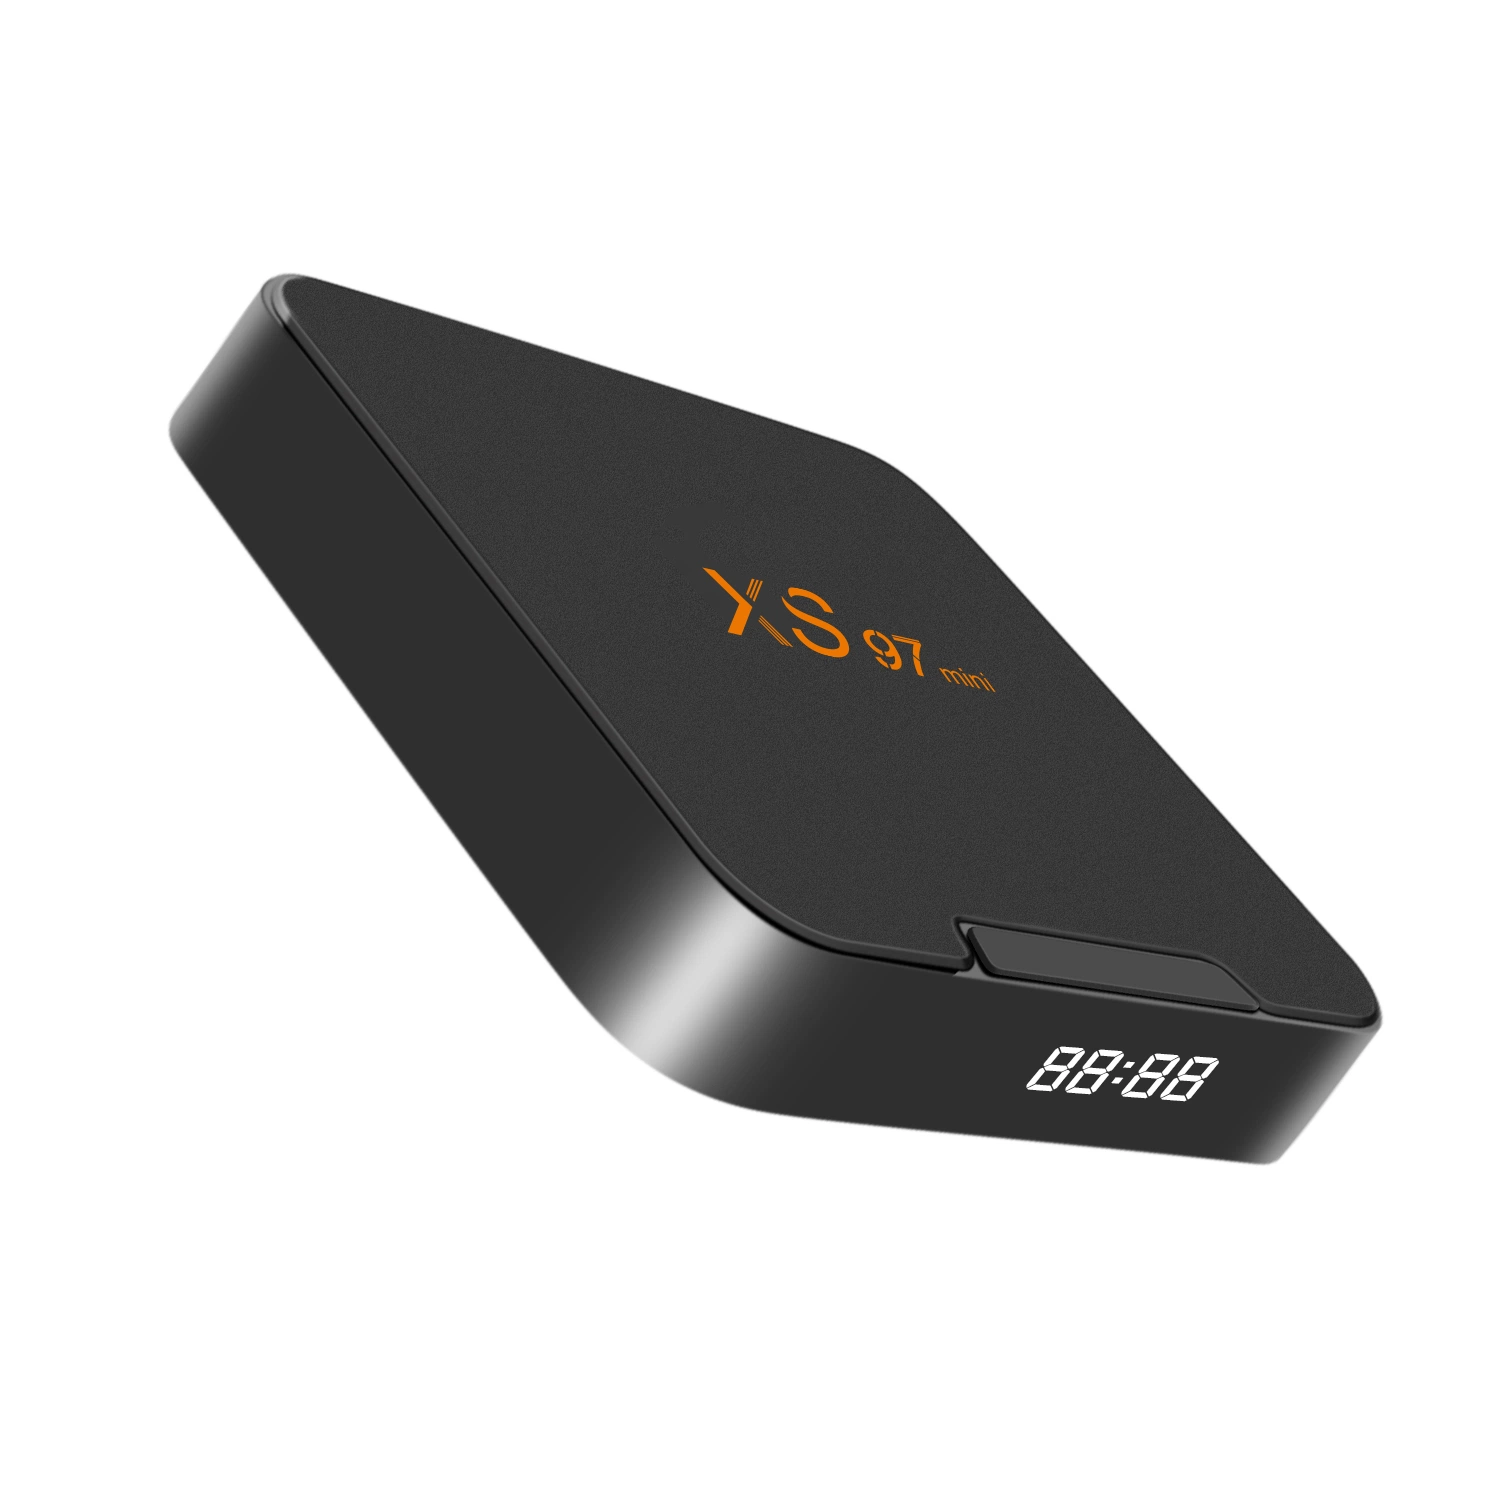 Xs97mini HD 4K Google Voice Search S905W2 Android TV Box 4K